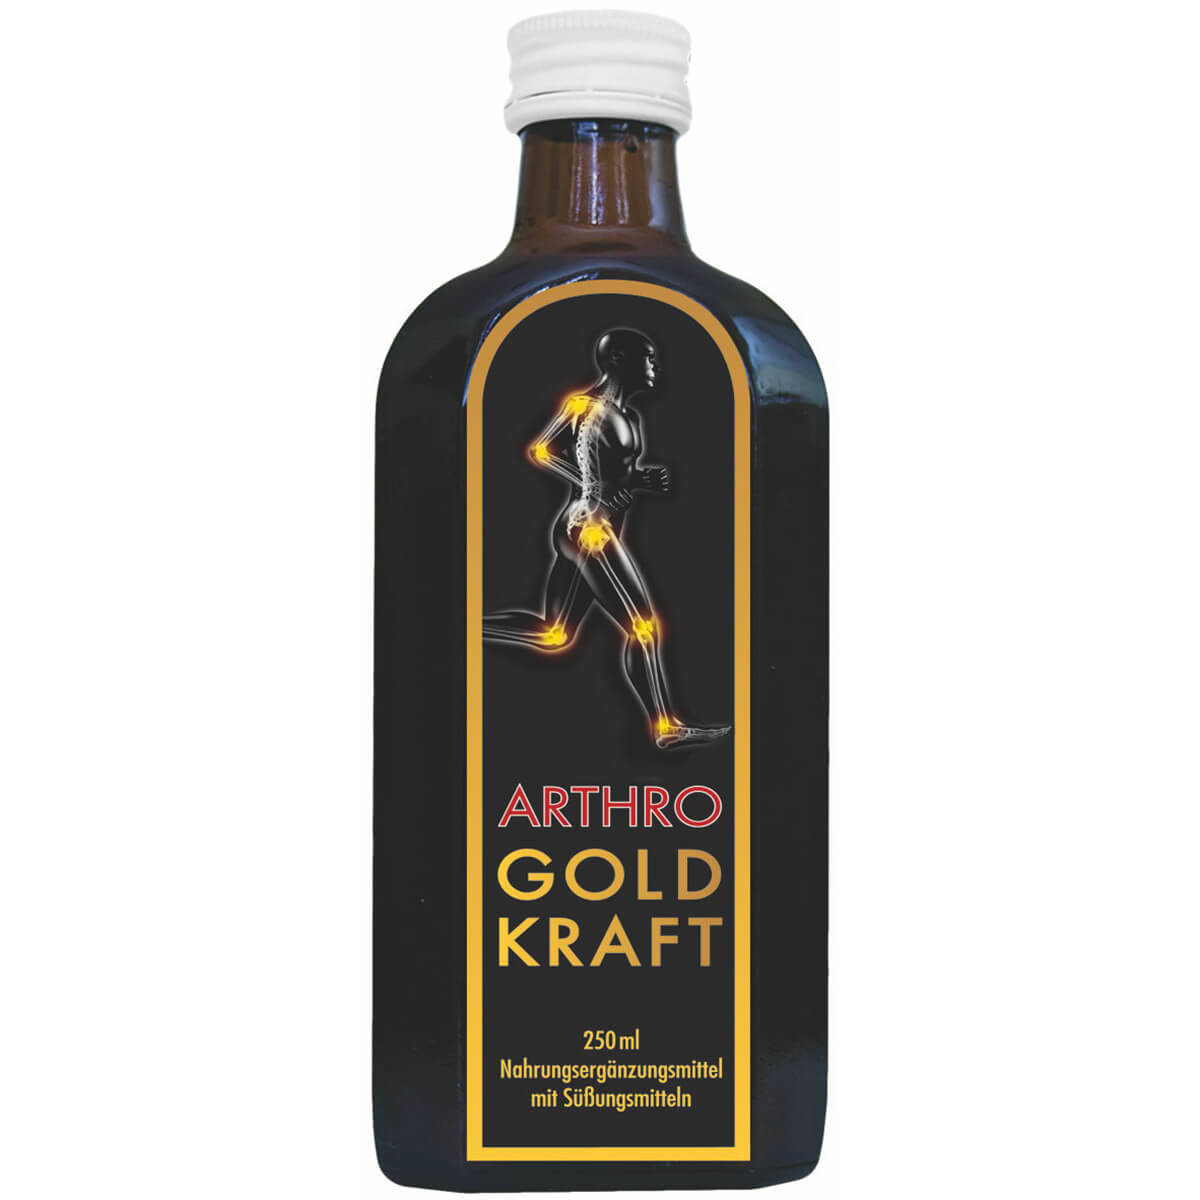 Arthro Gold Kraft